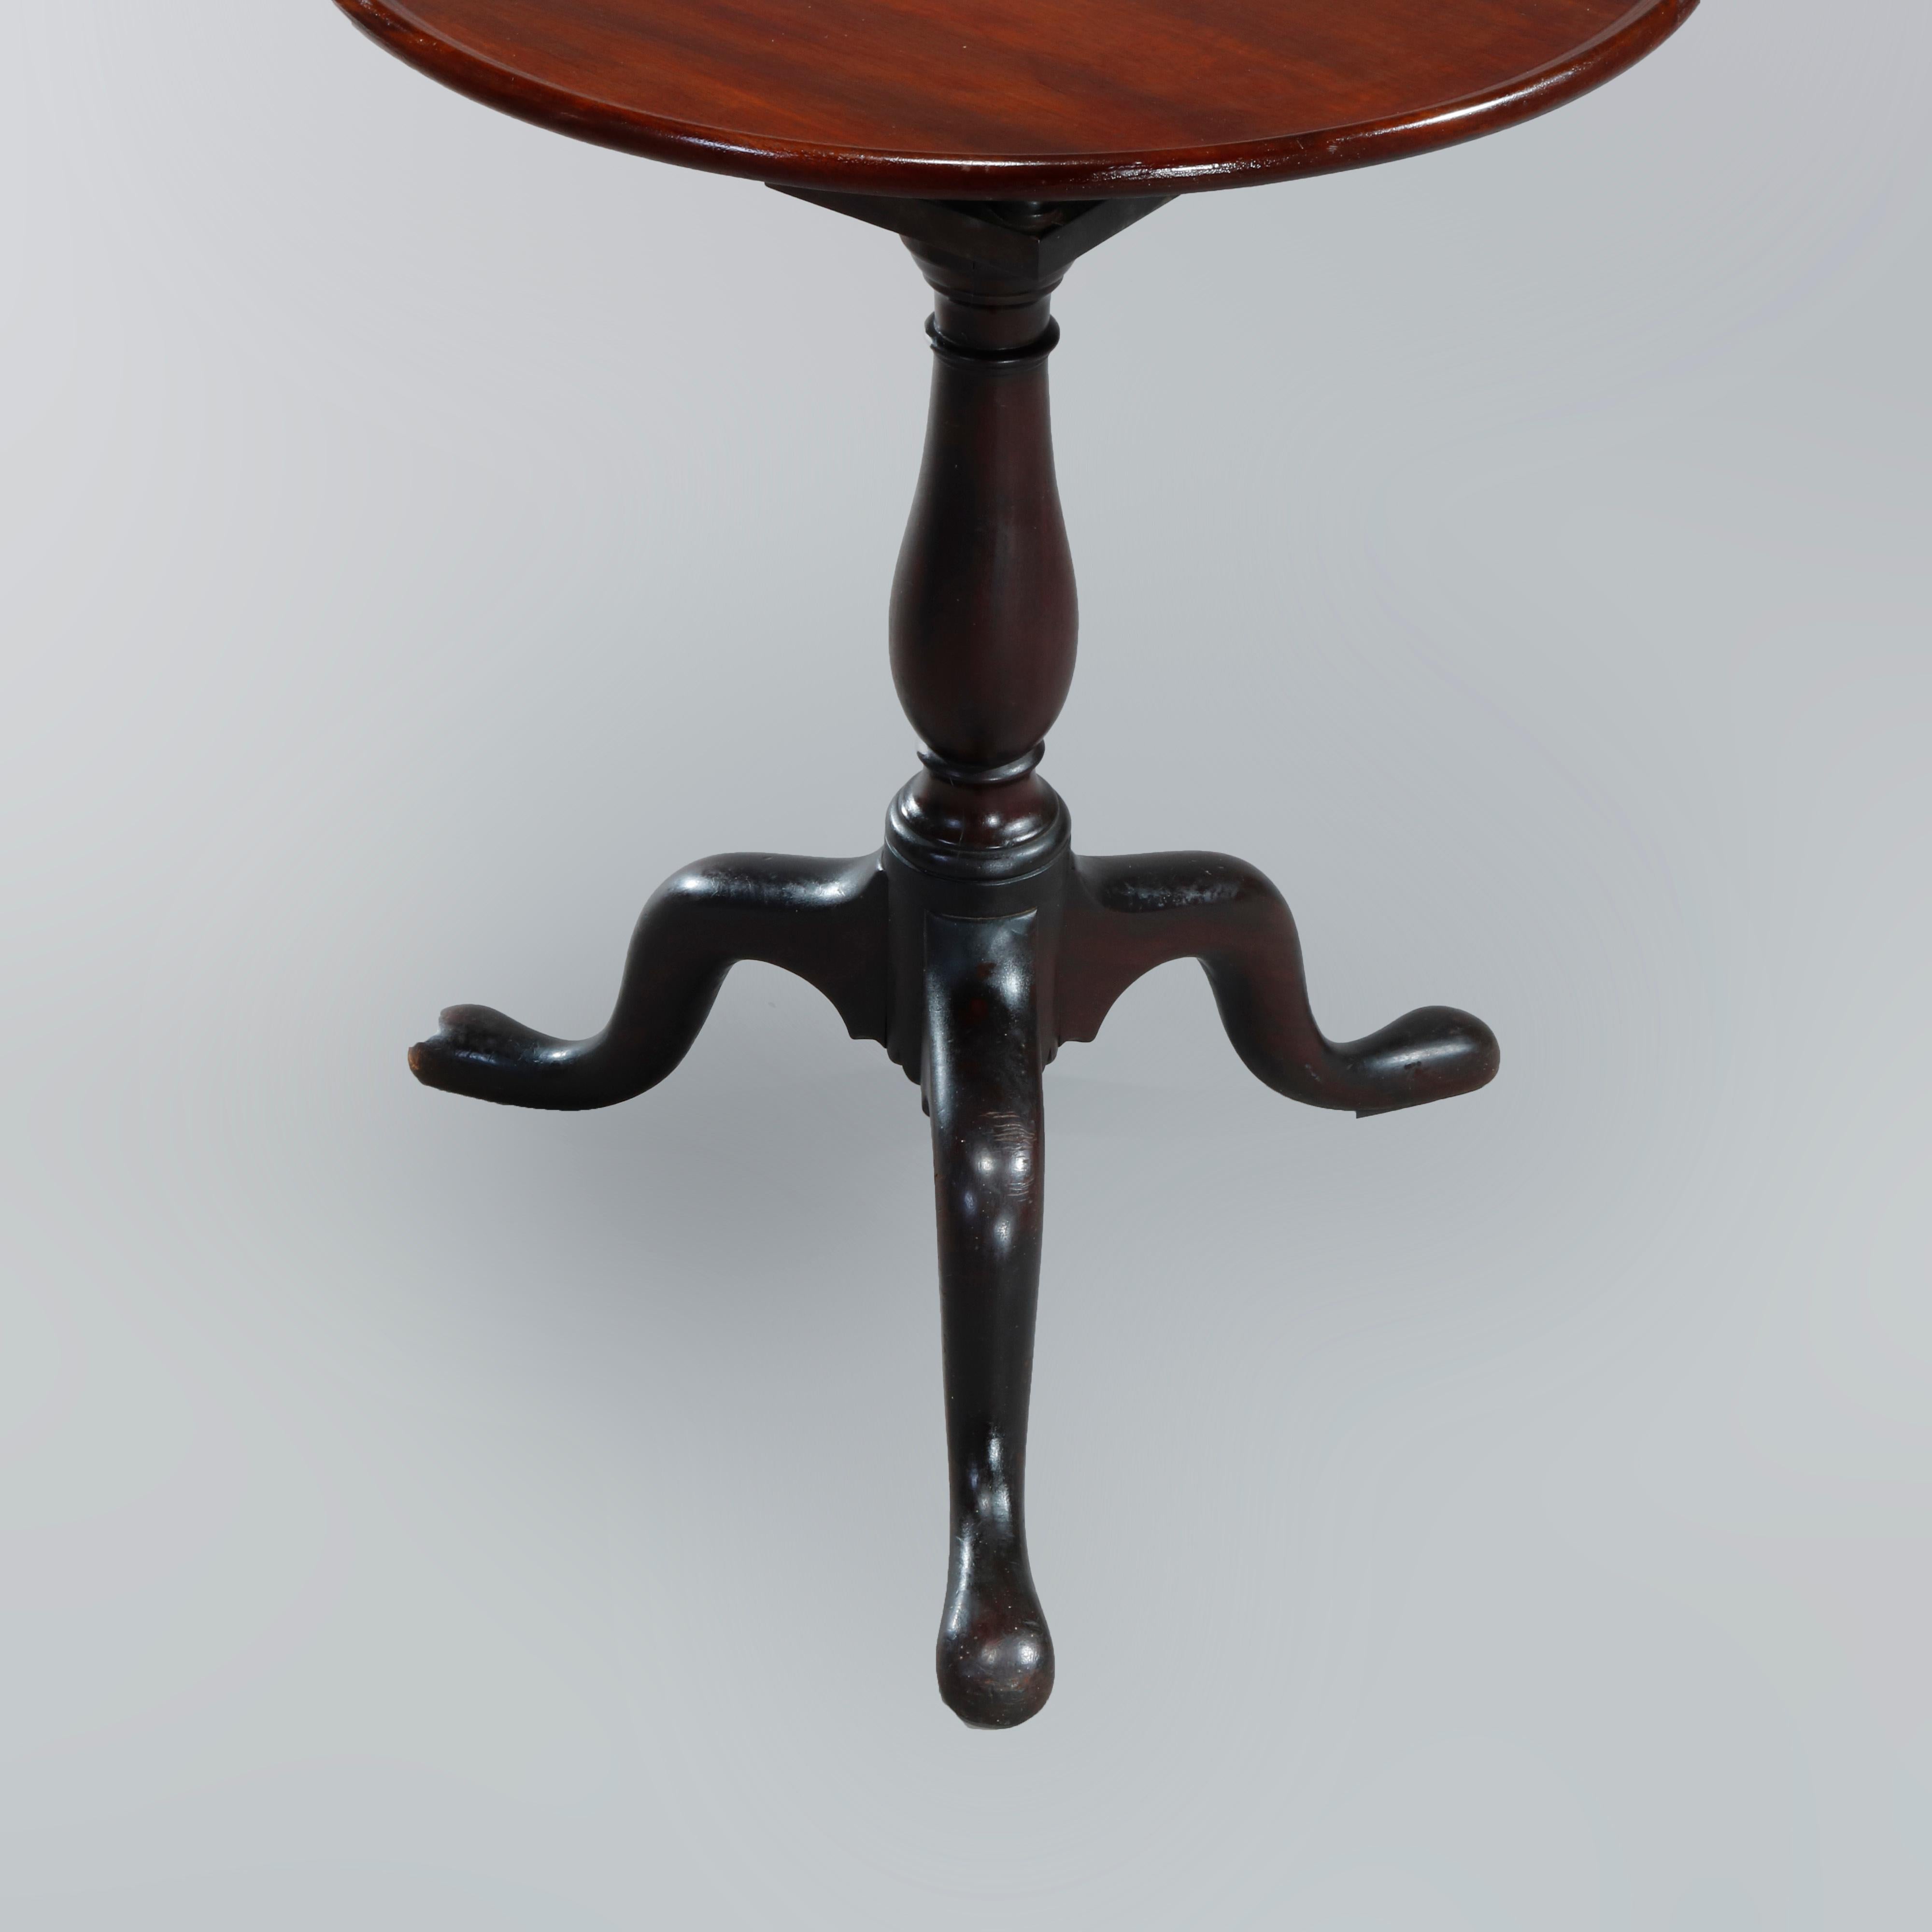 Wood 18th Century Antique English Queen Anne Mahogany Birdcage Tilt-Top Table, c1770